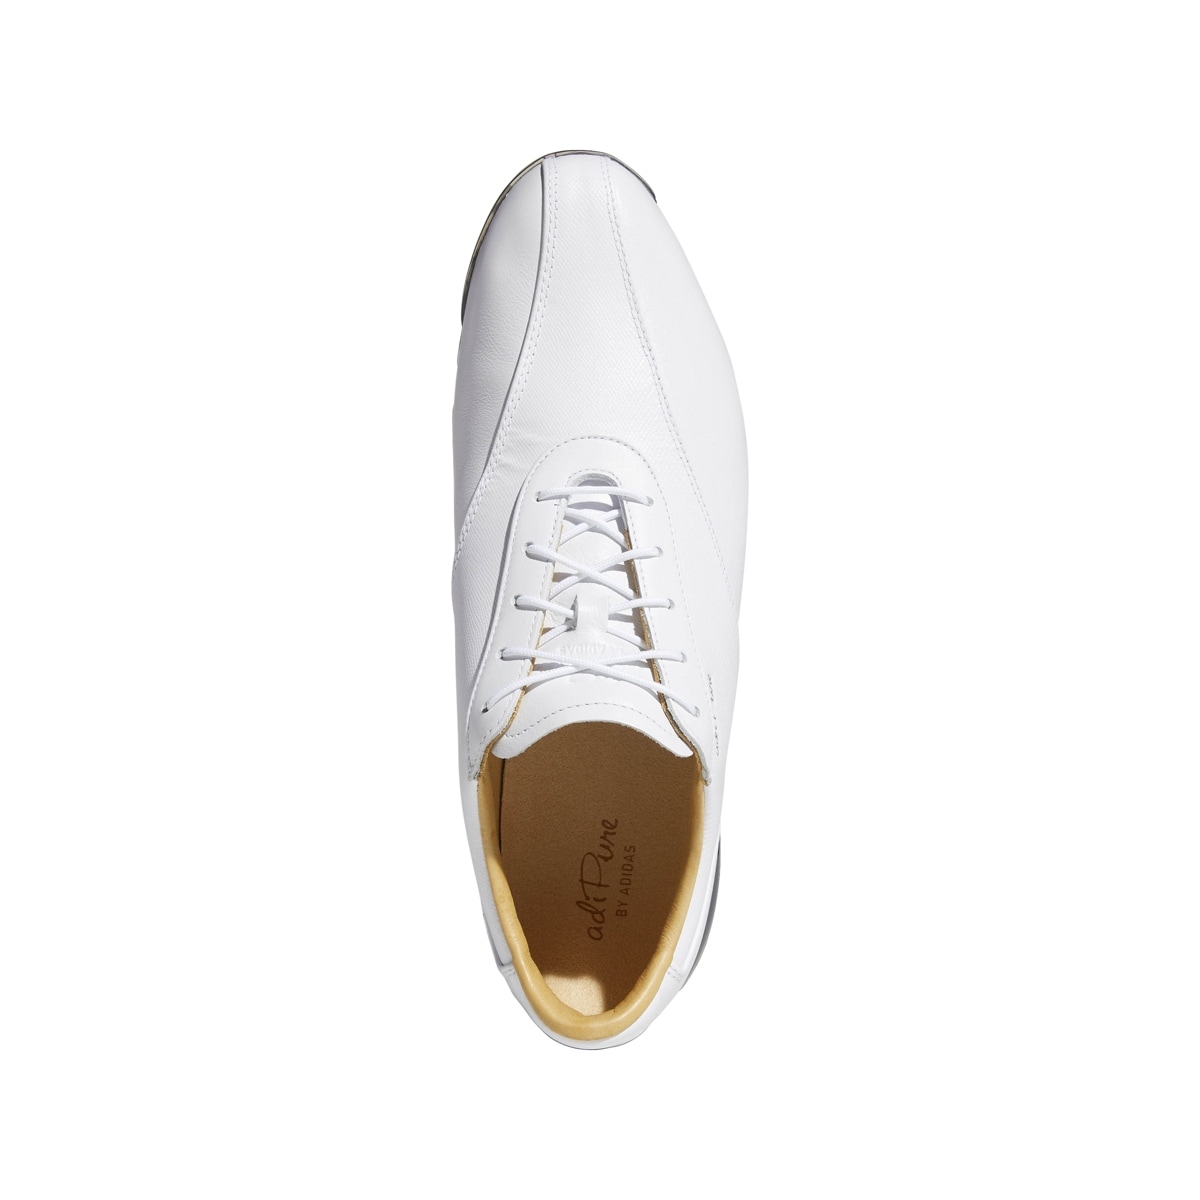 adidas adipure tp 2.0 golf shoes